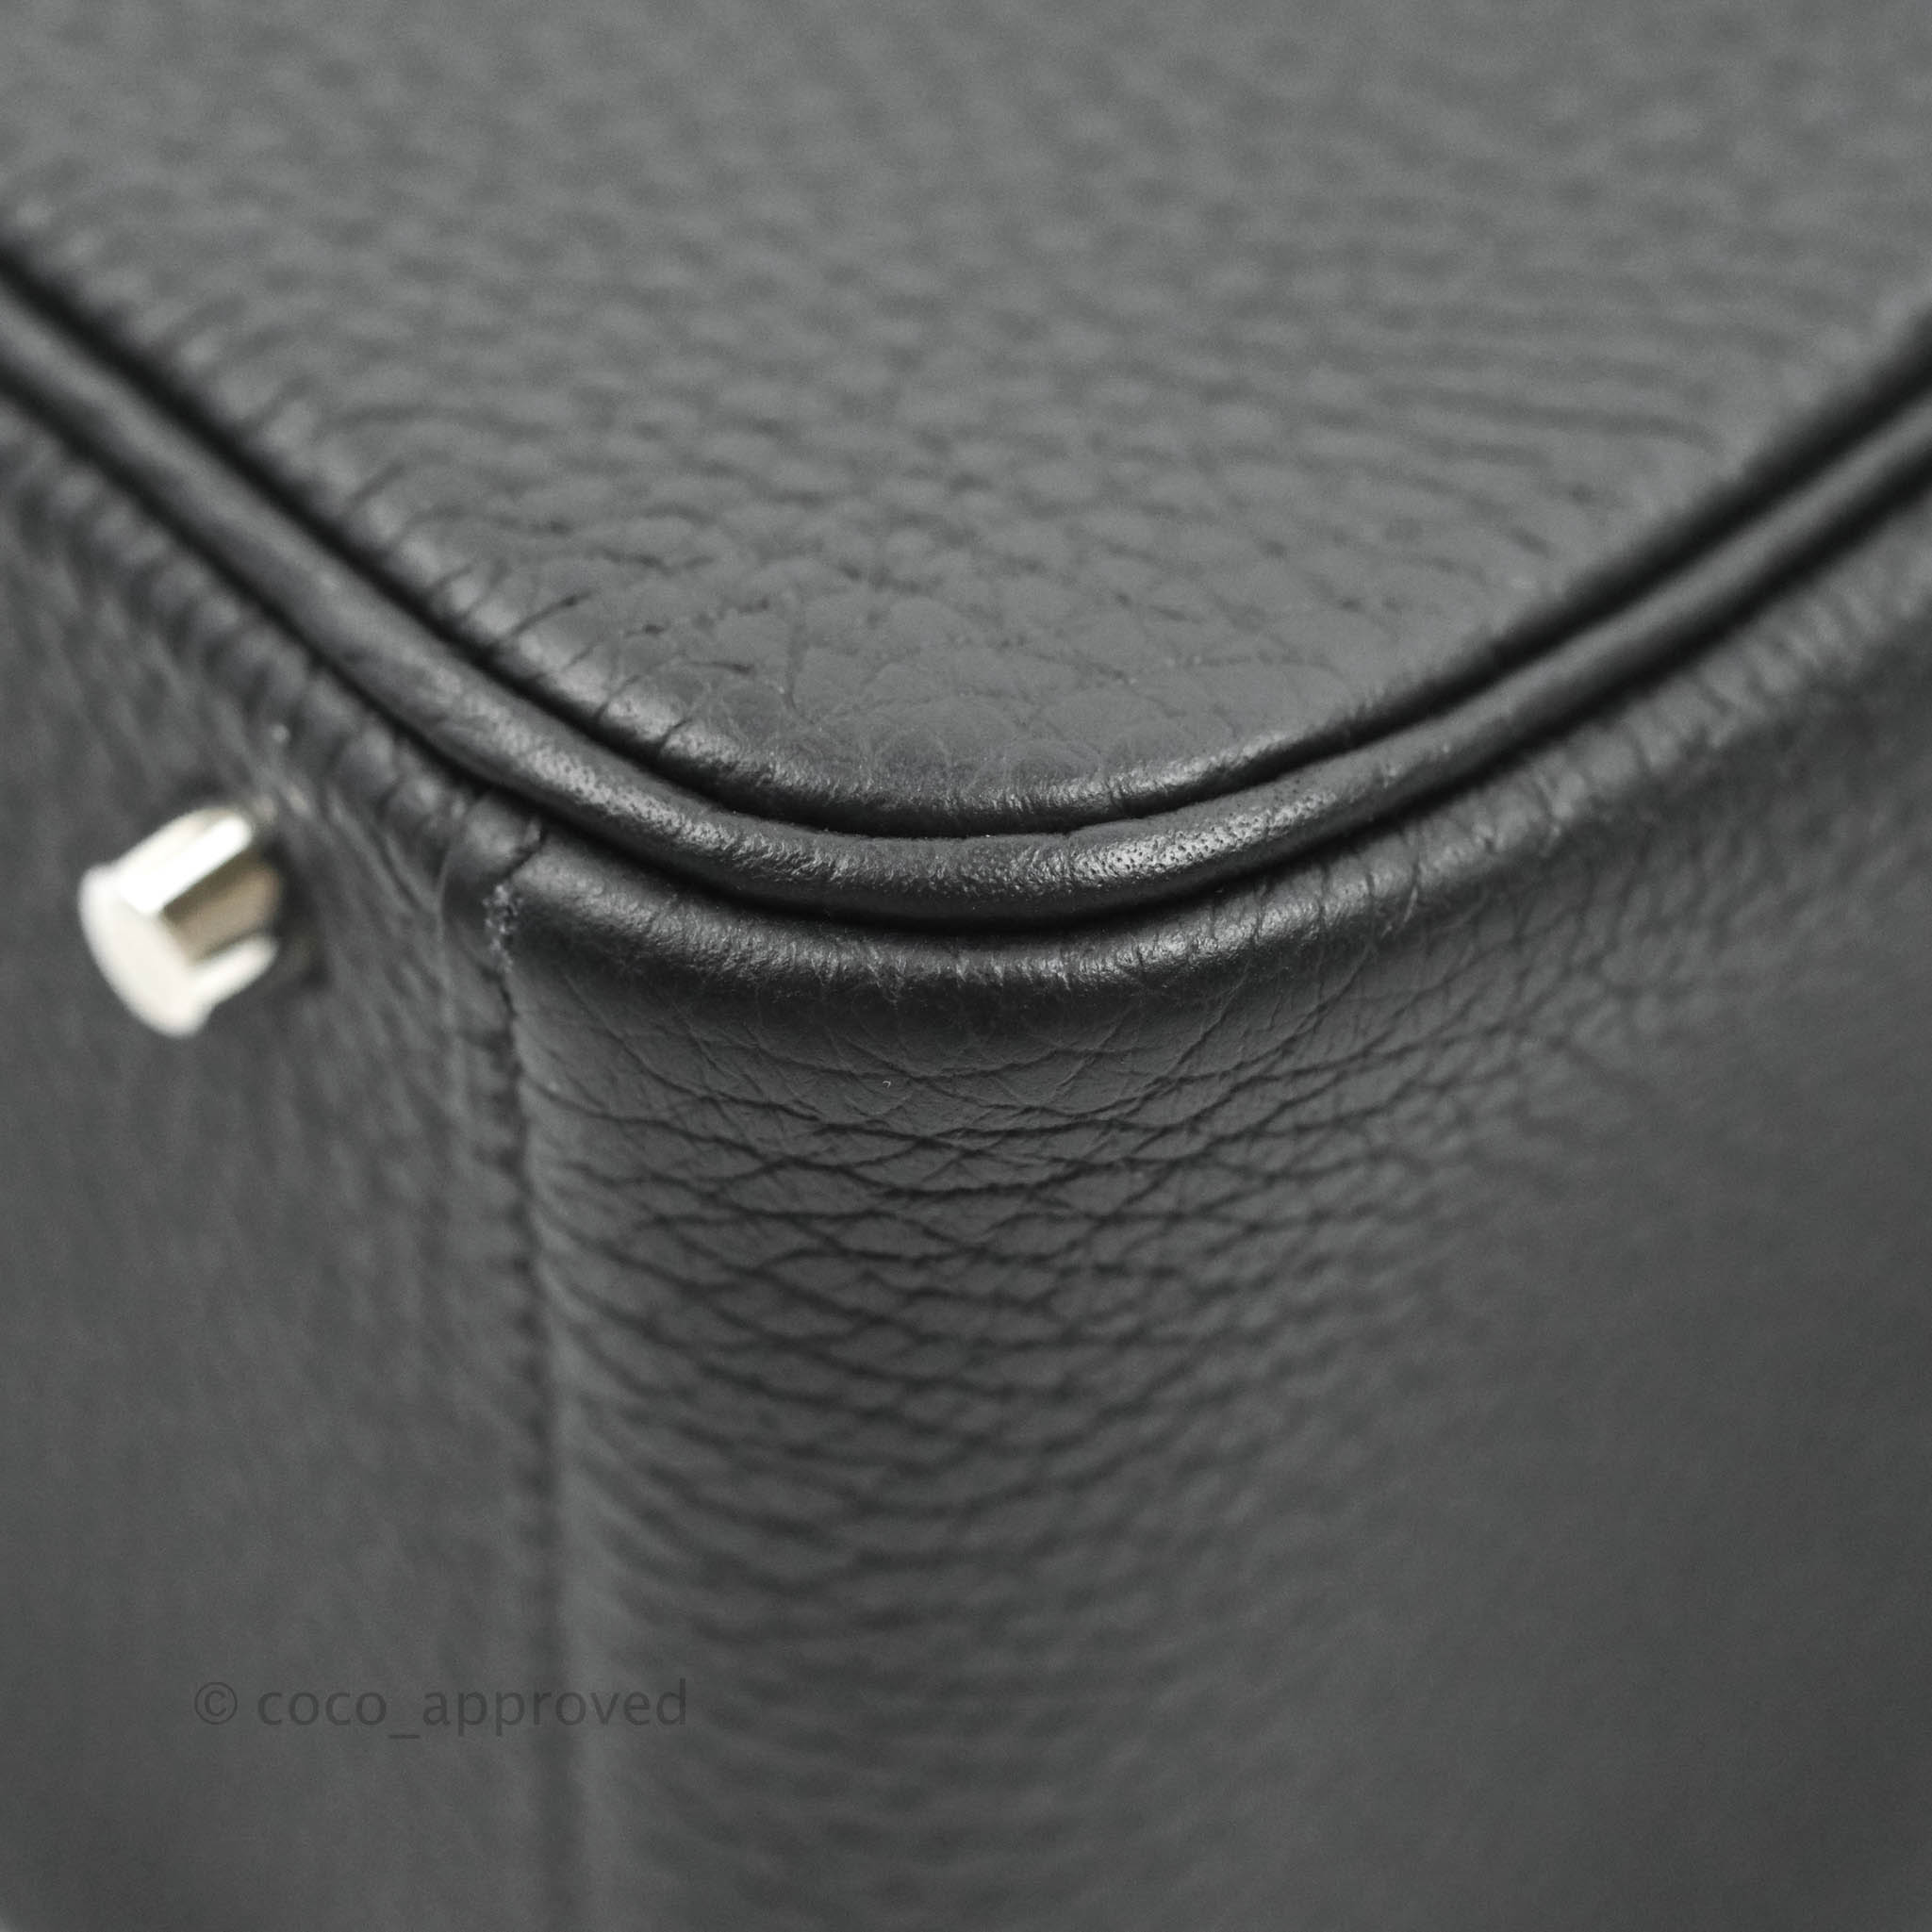 New] Hermès Lindy Mini 20  Noir, Taurillon Clemence Leather, Palladi – The  Super Rich Concierge Kuala Lumpur